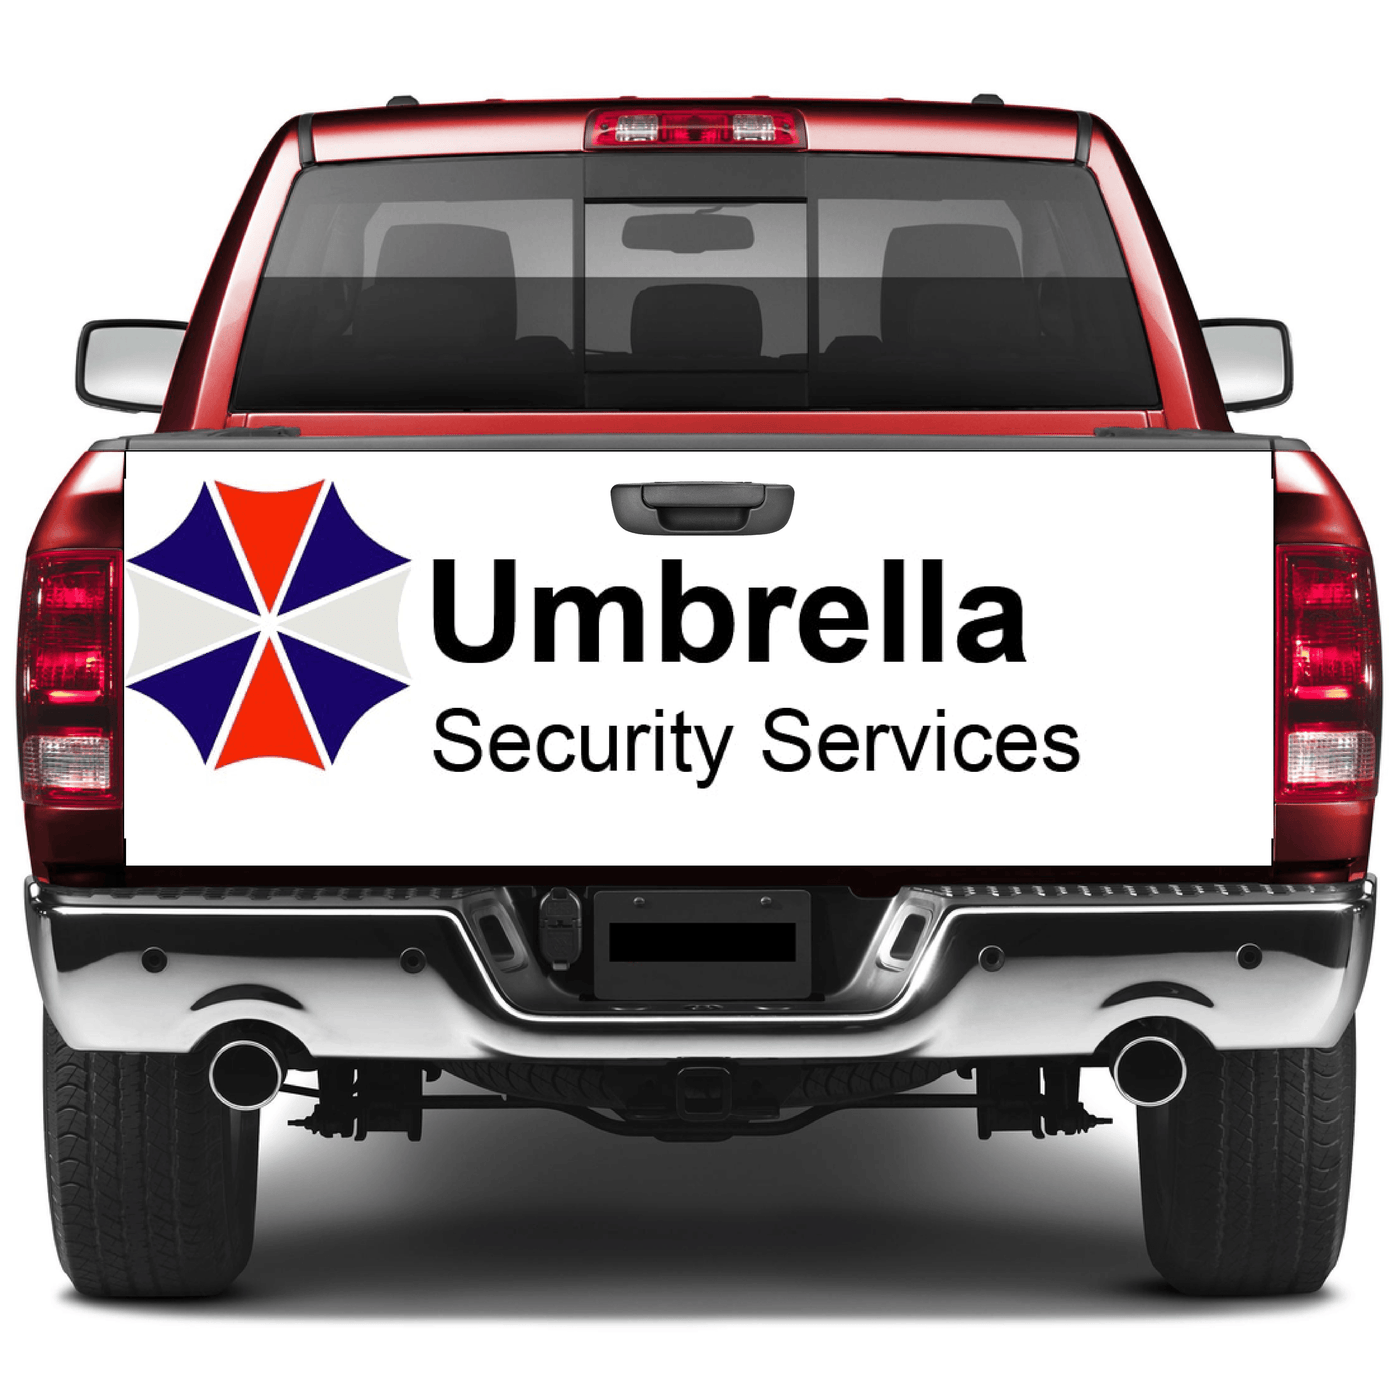 Umbrella Security Services Tailgate Wraps For Trucks SUV Vinyl Decals Sticker